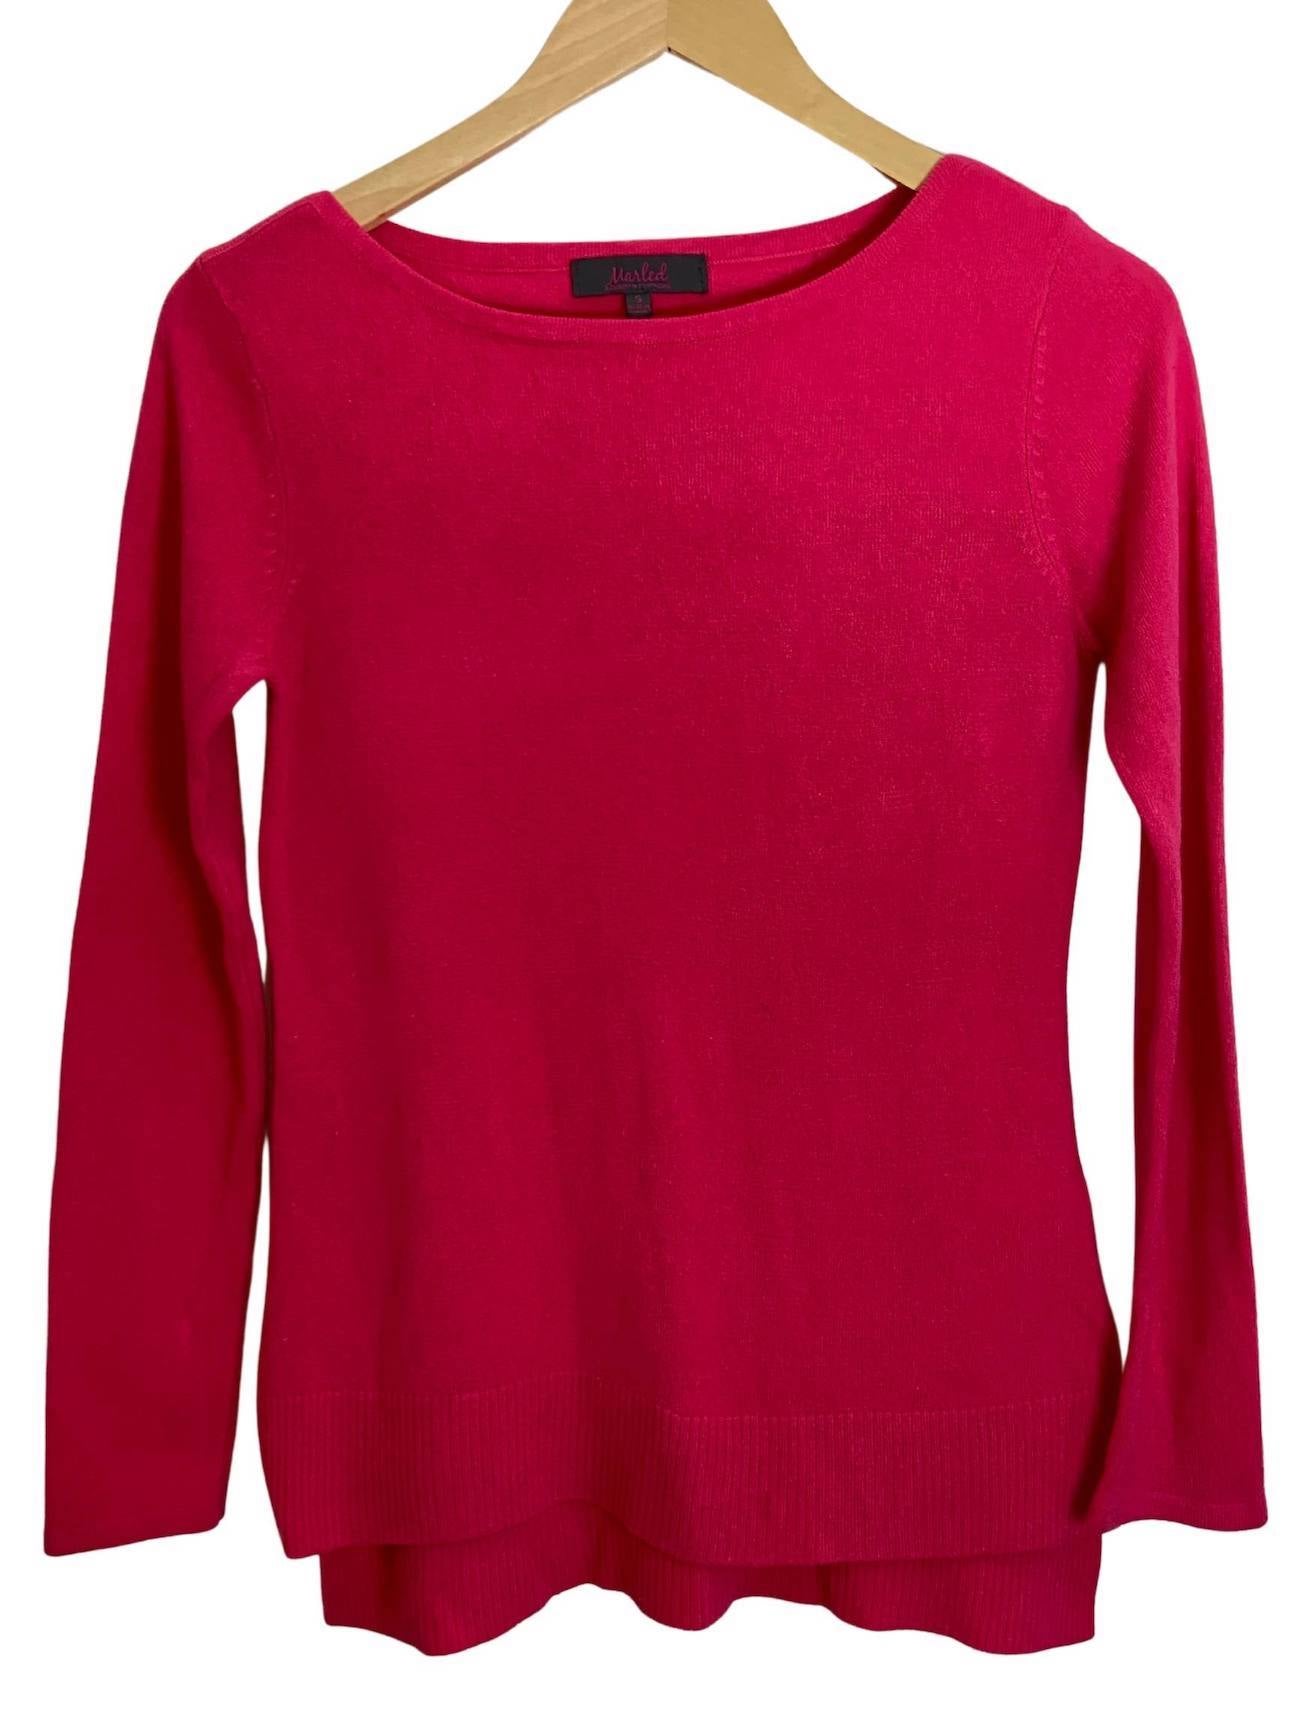 Light Summer marled azalea pink boatneck sweater